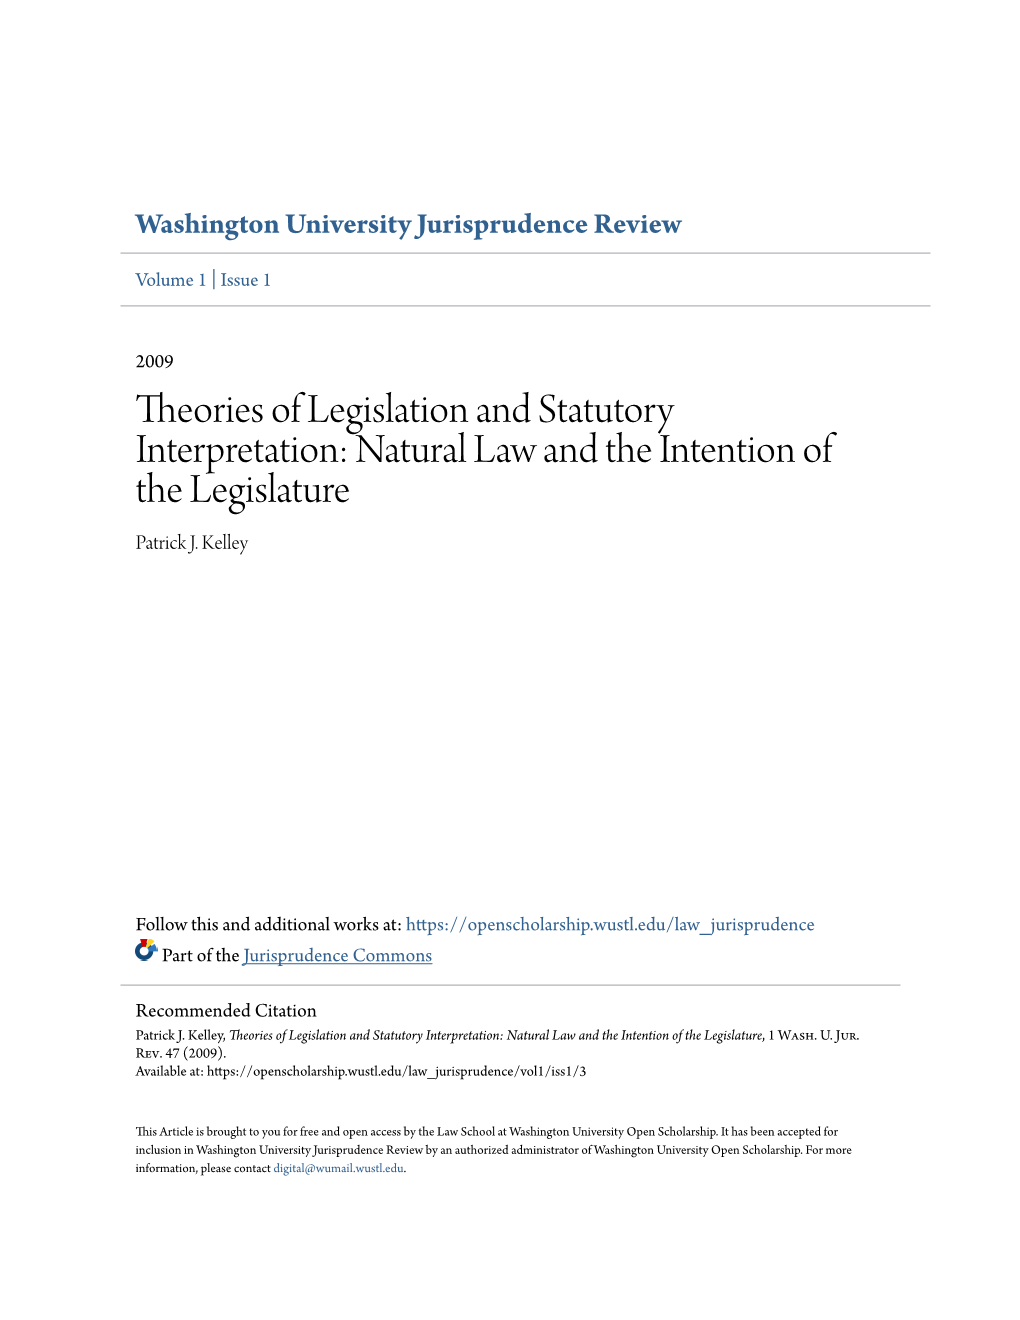 Theories of Legislation and Statutory Interpretation: Natural Law and the Intention of the Legislature Patrick J